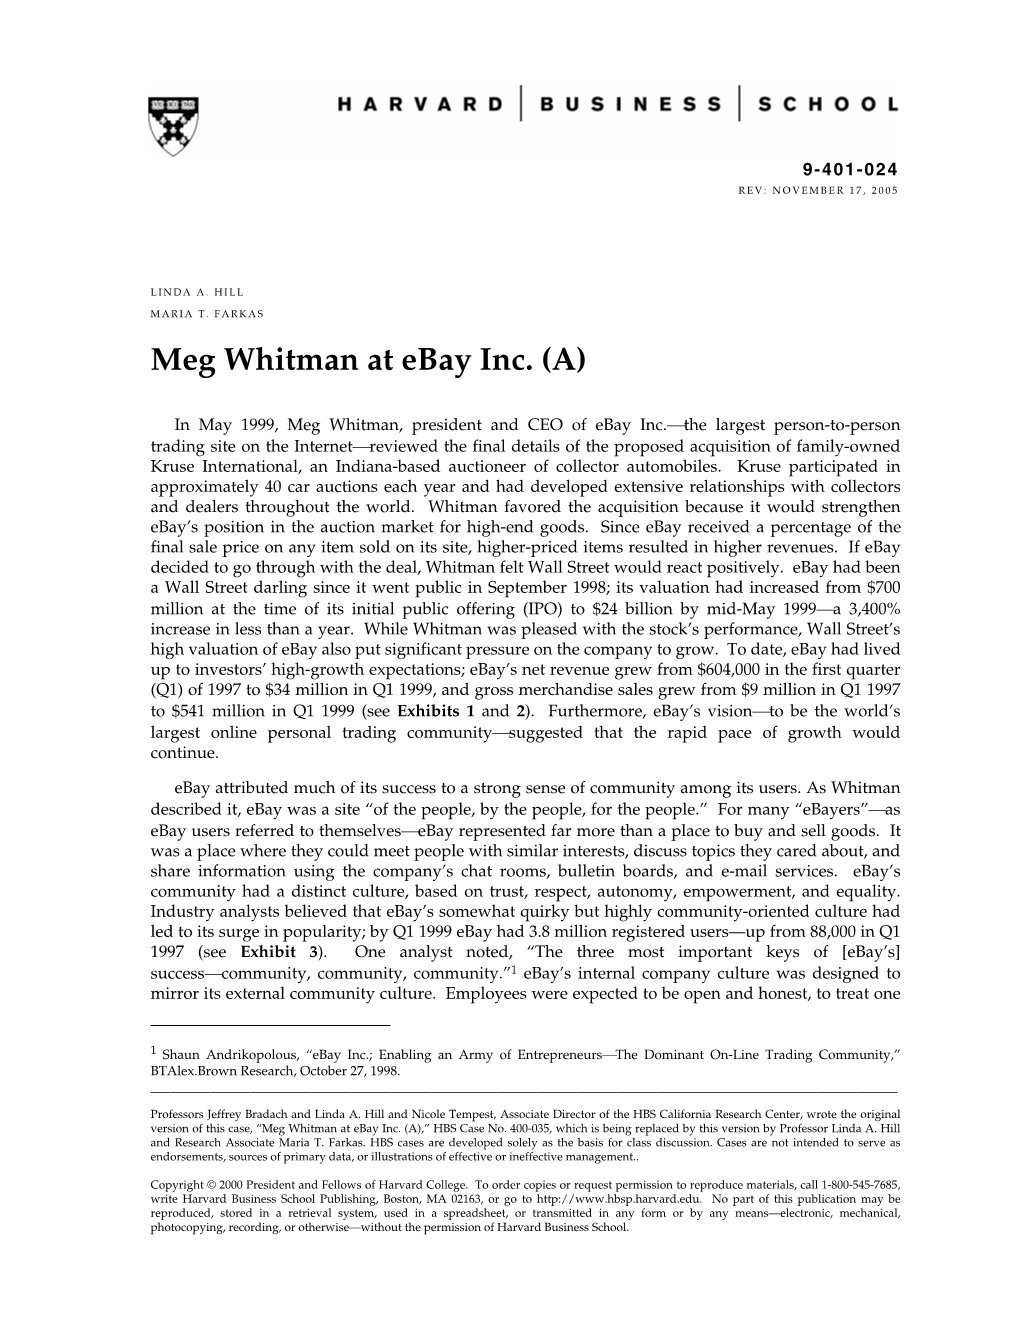 Meg Whitman at Ebay Inc. (A)